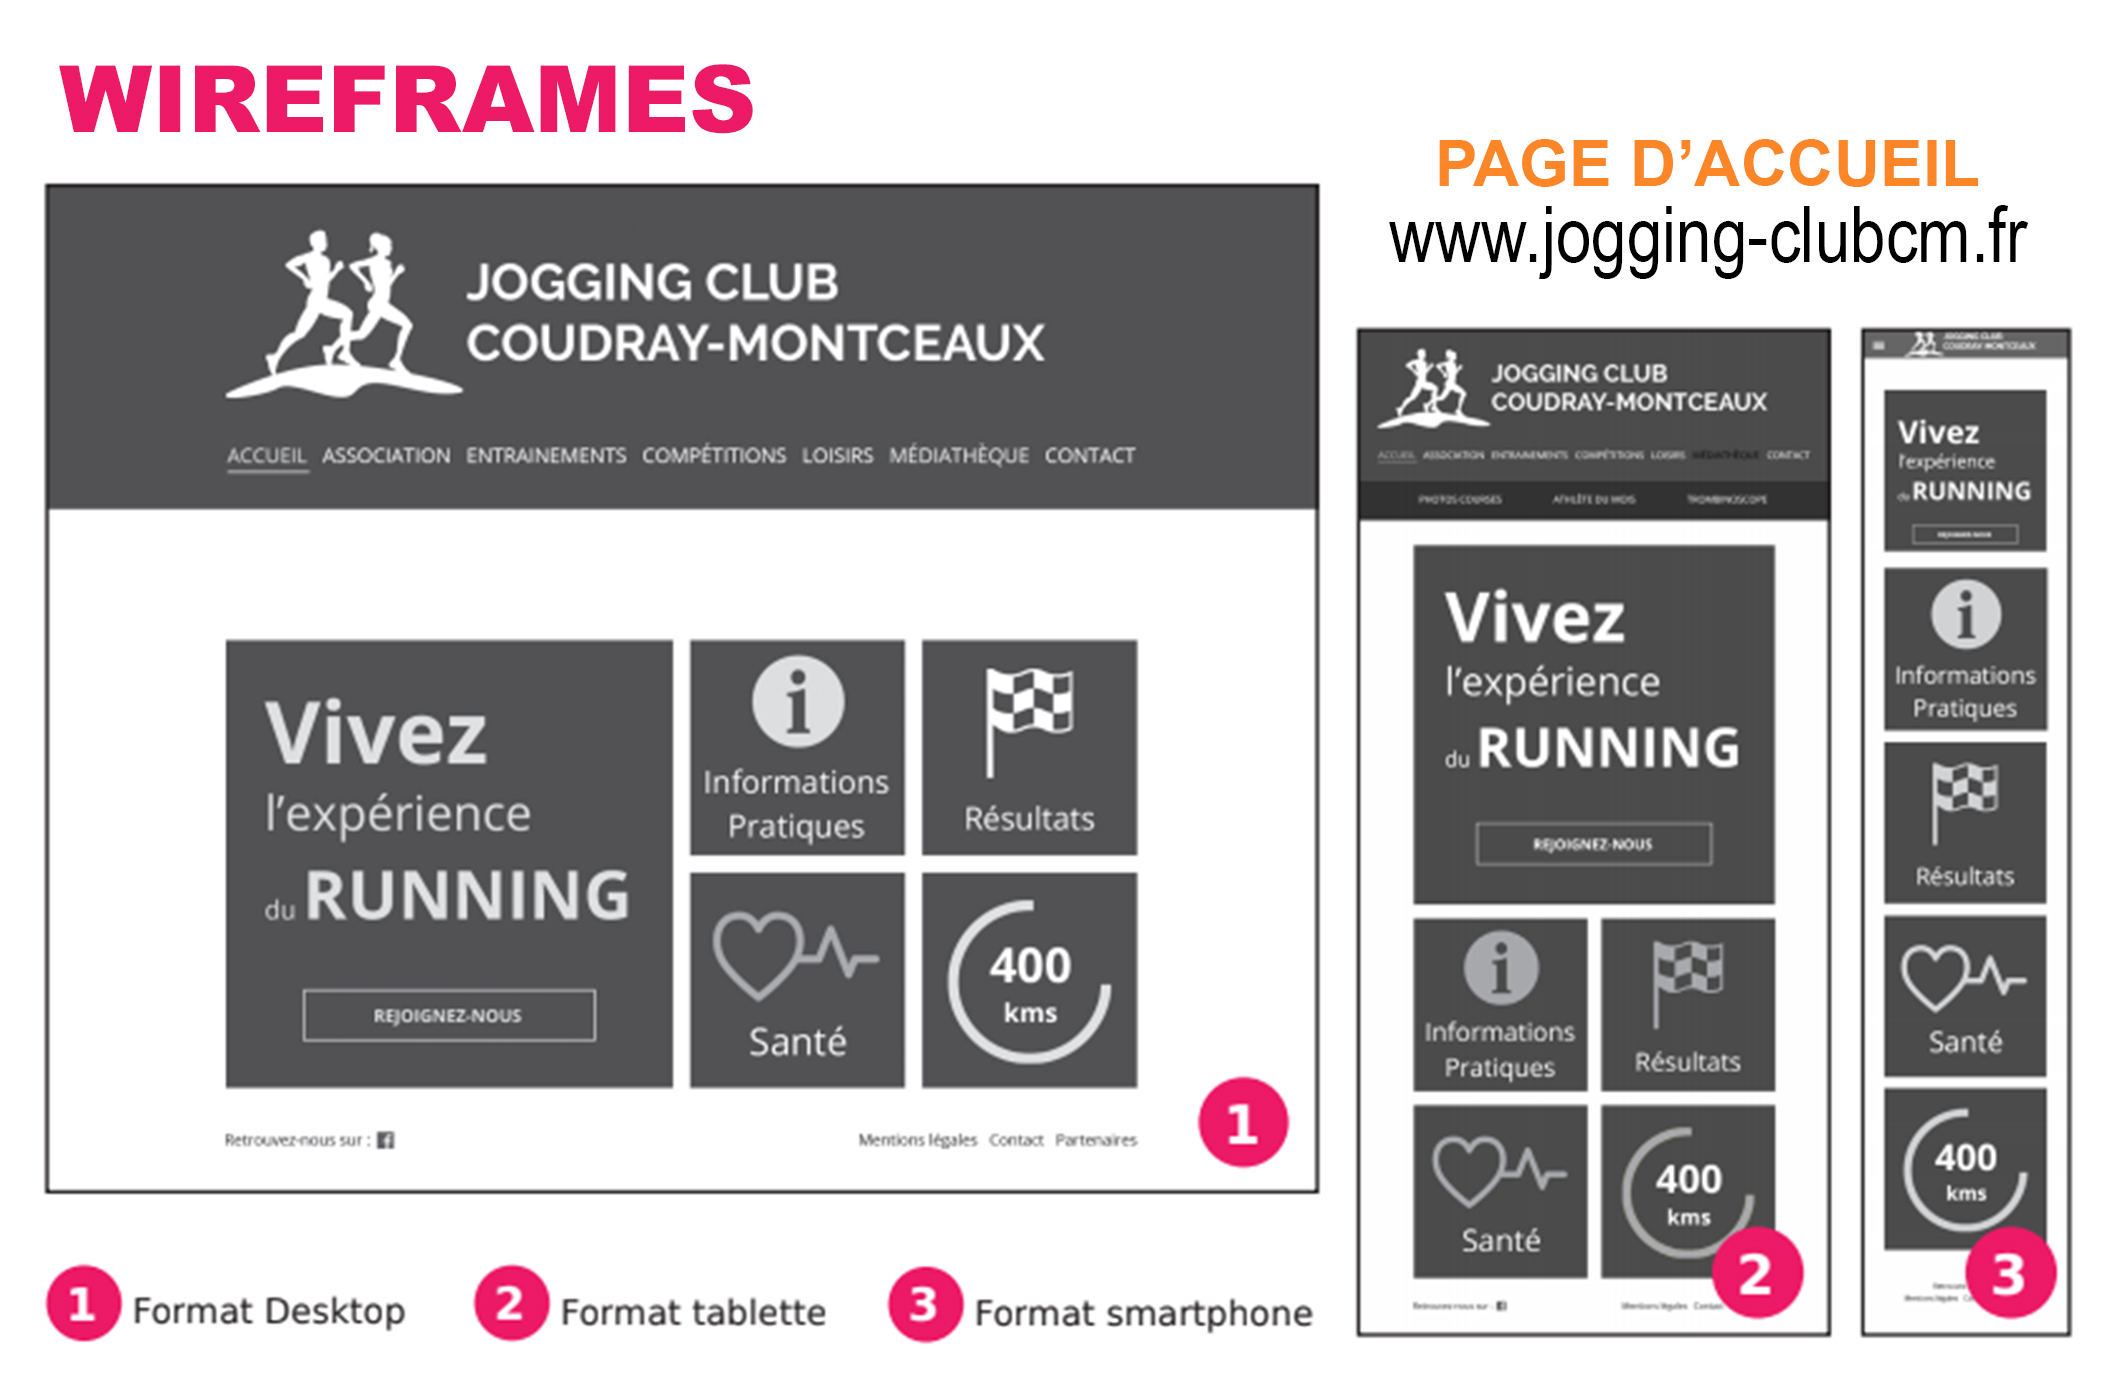 jogging-clubcm.fr